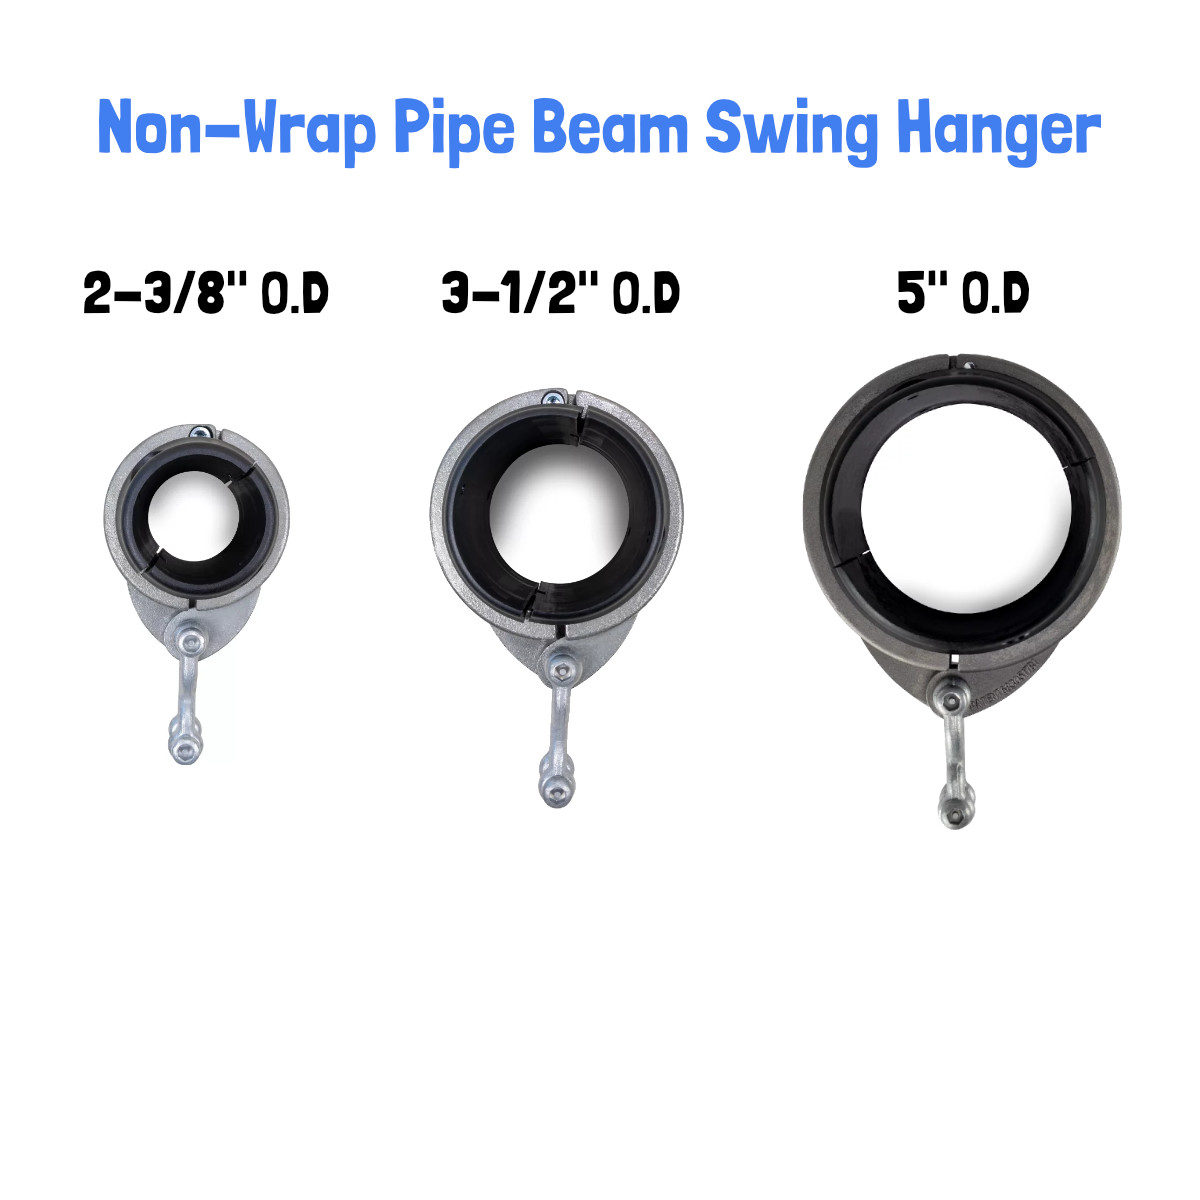 Non-Wrap Pipe Beam Swing Hanger 